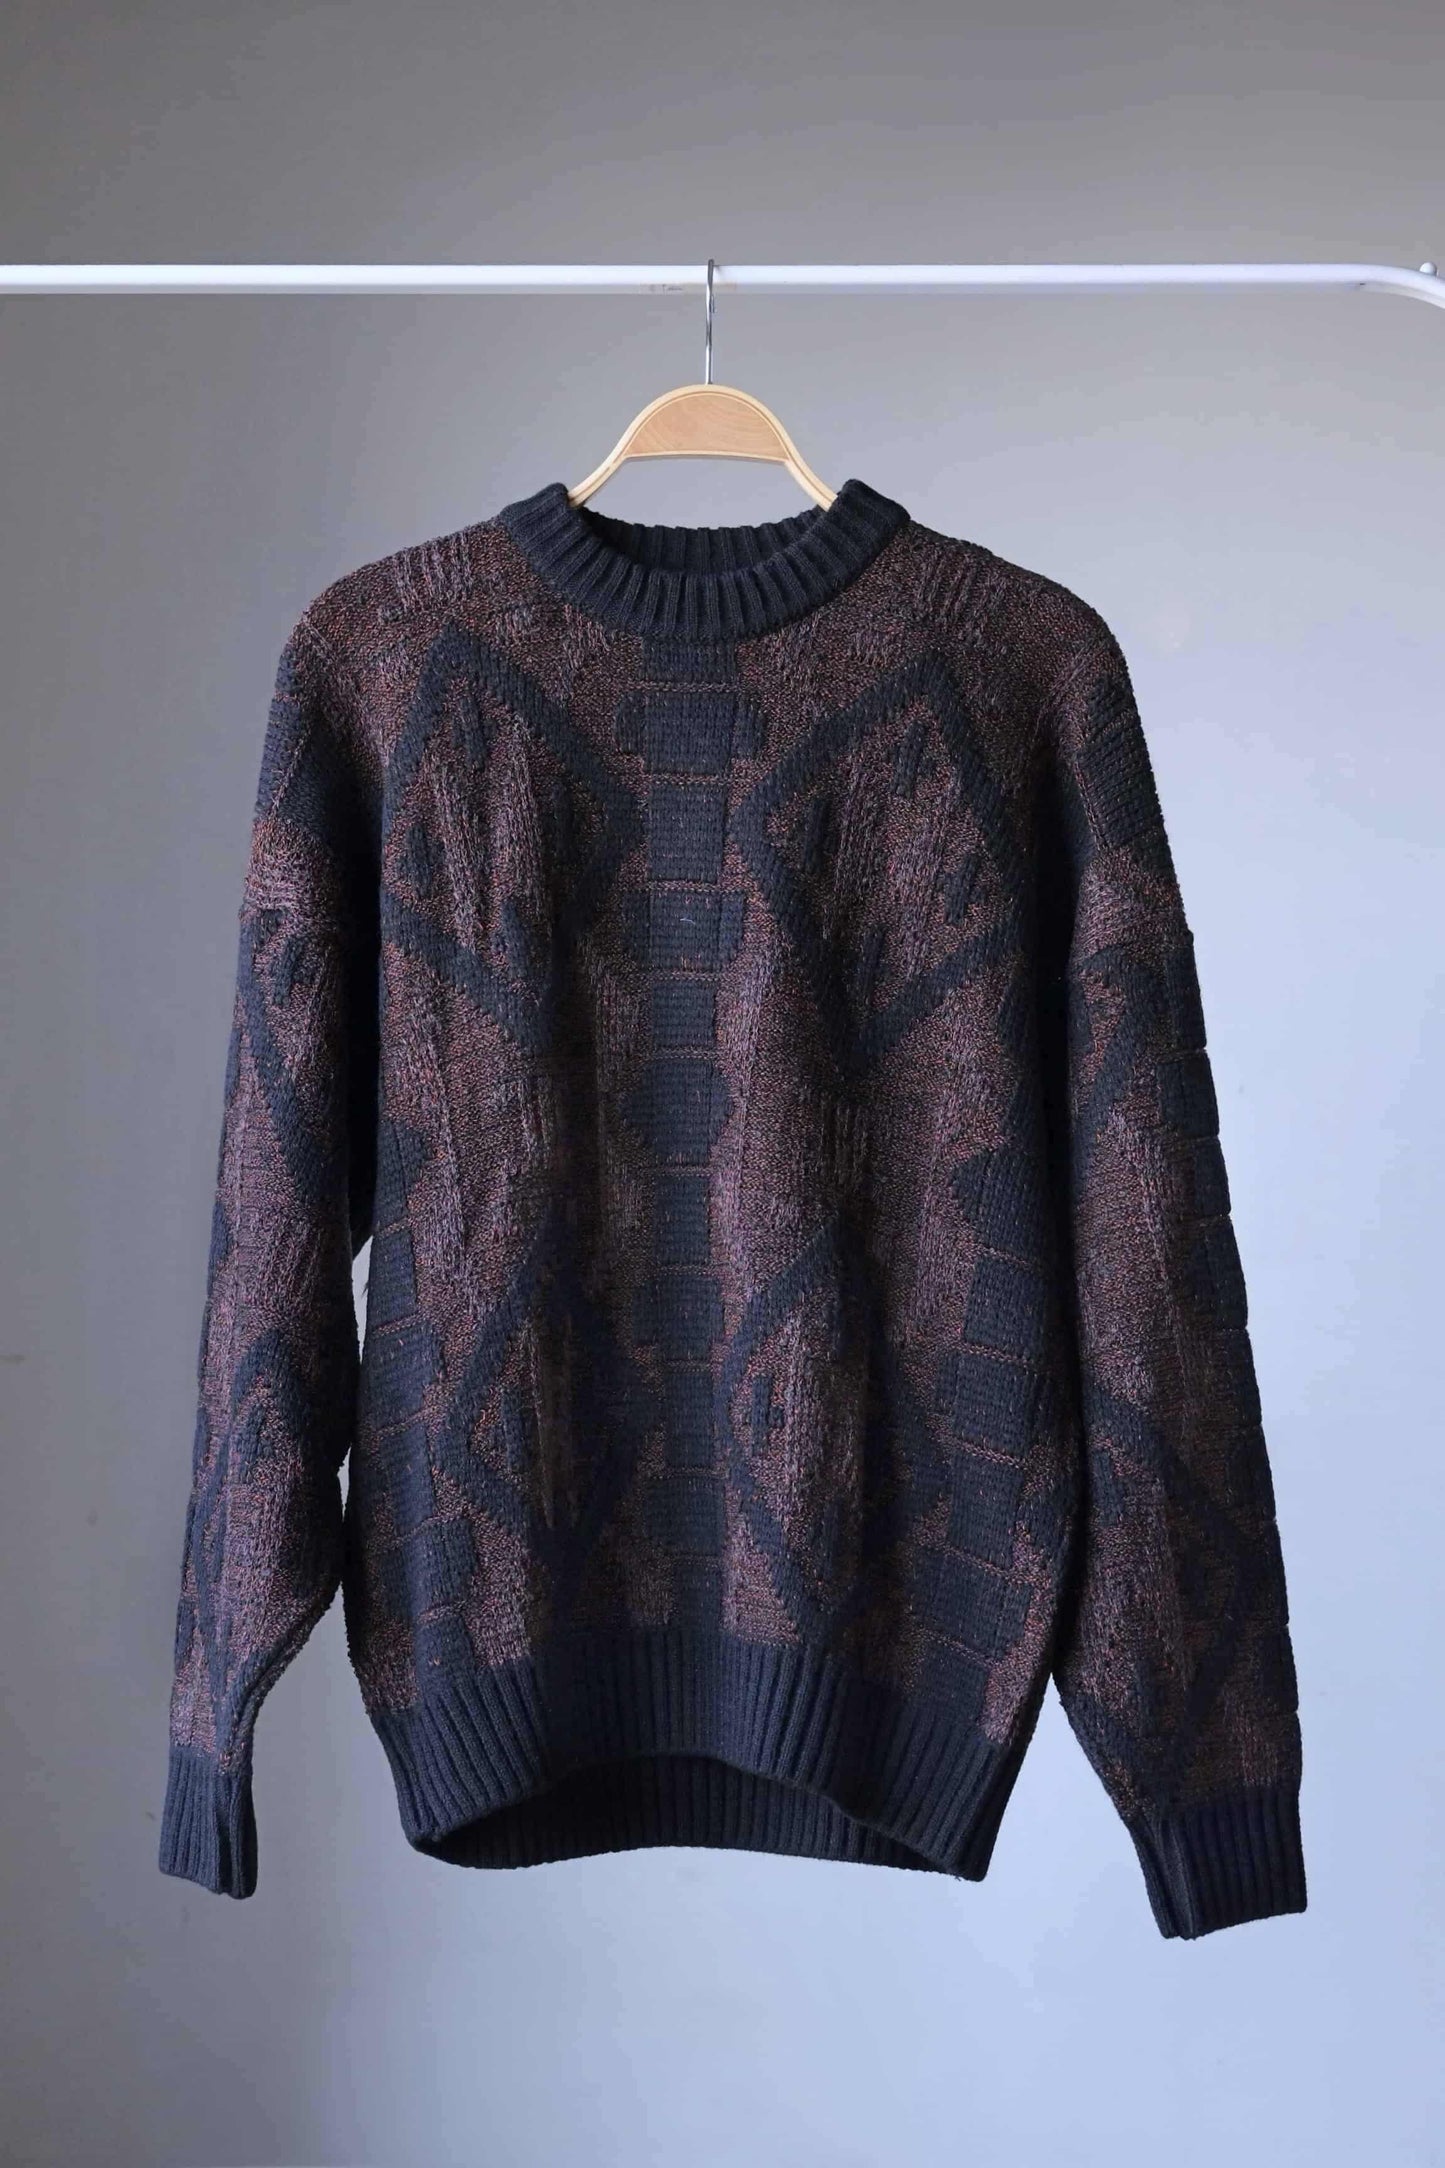 Vintage 90's Jacquard Pattern Sweater brown black